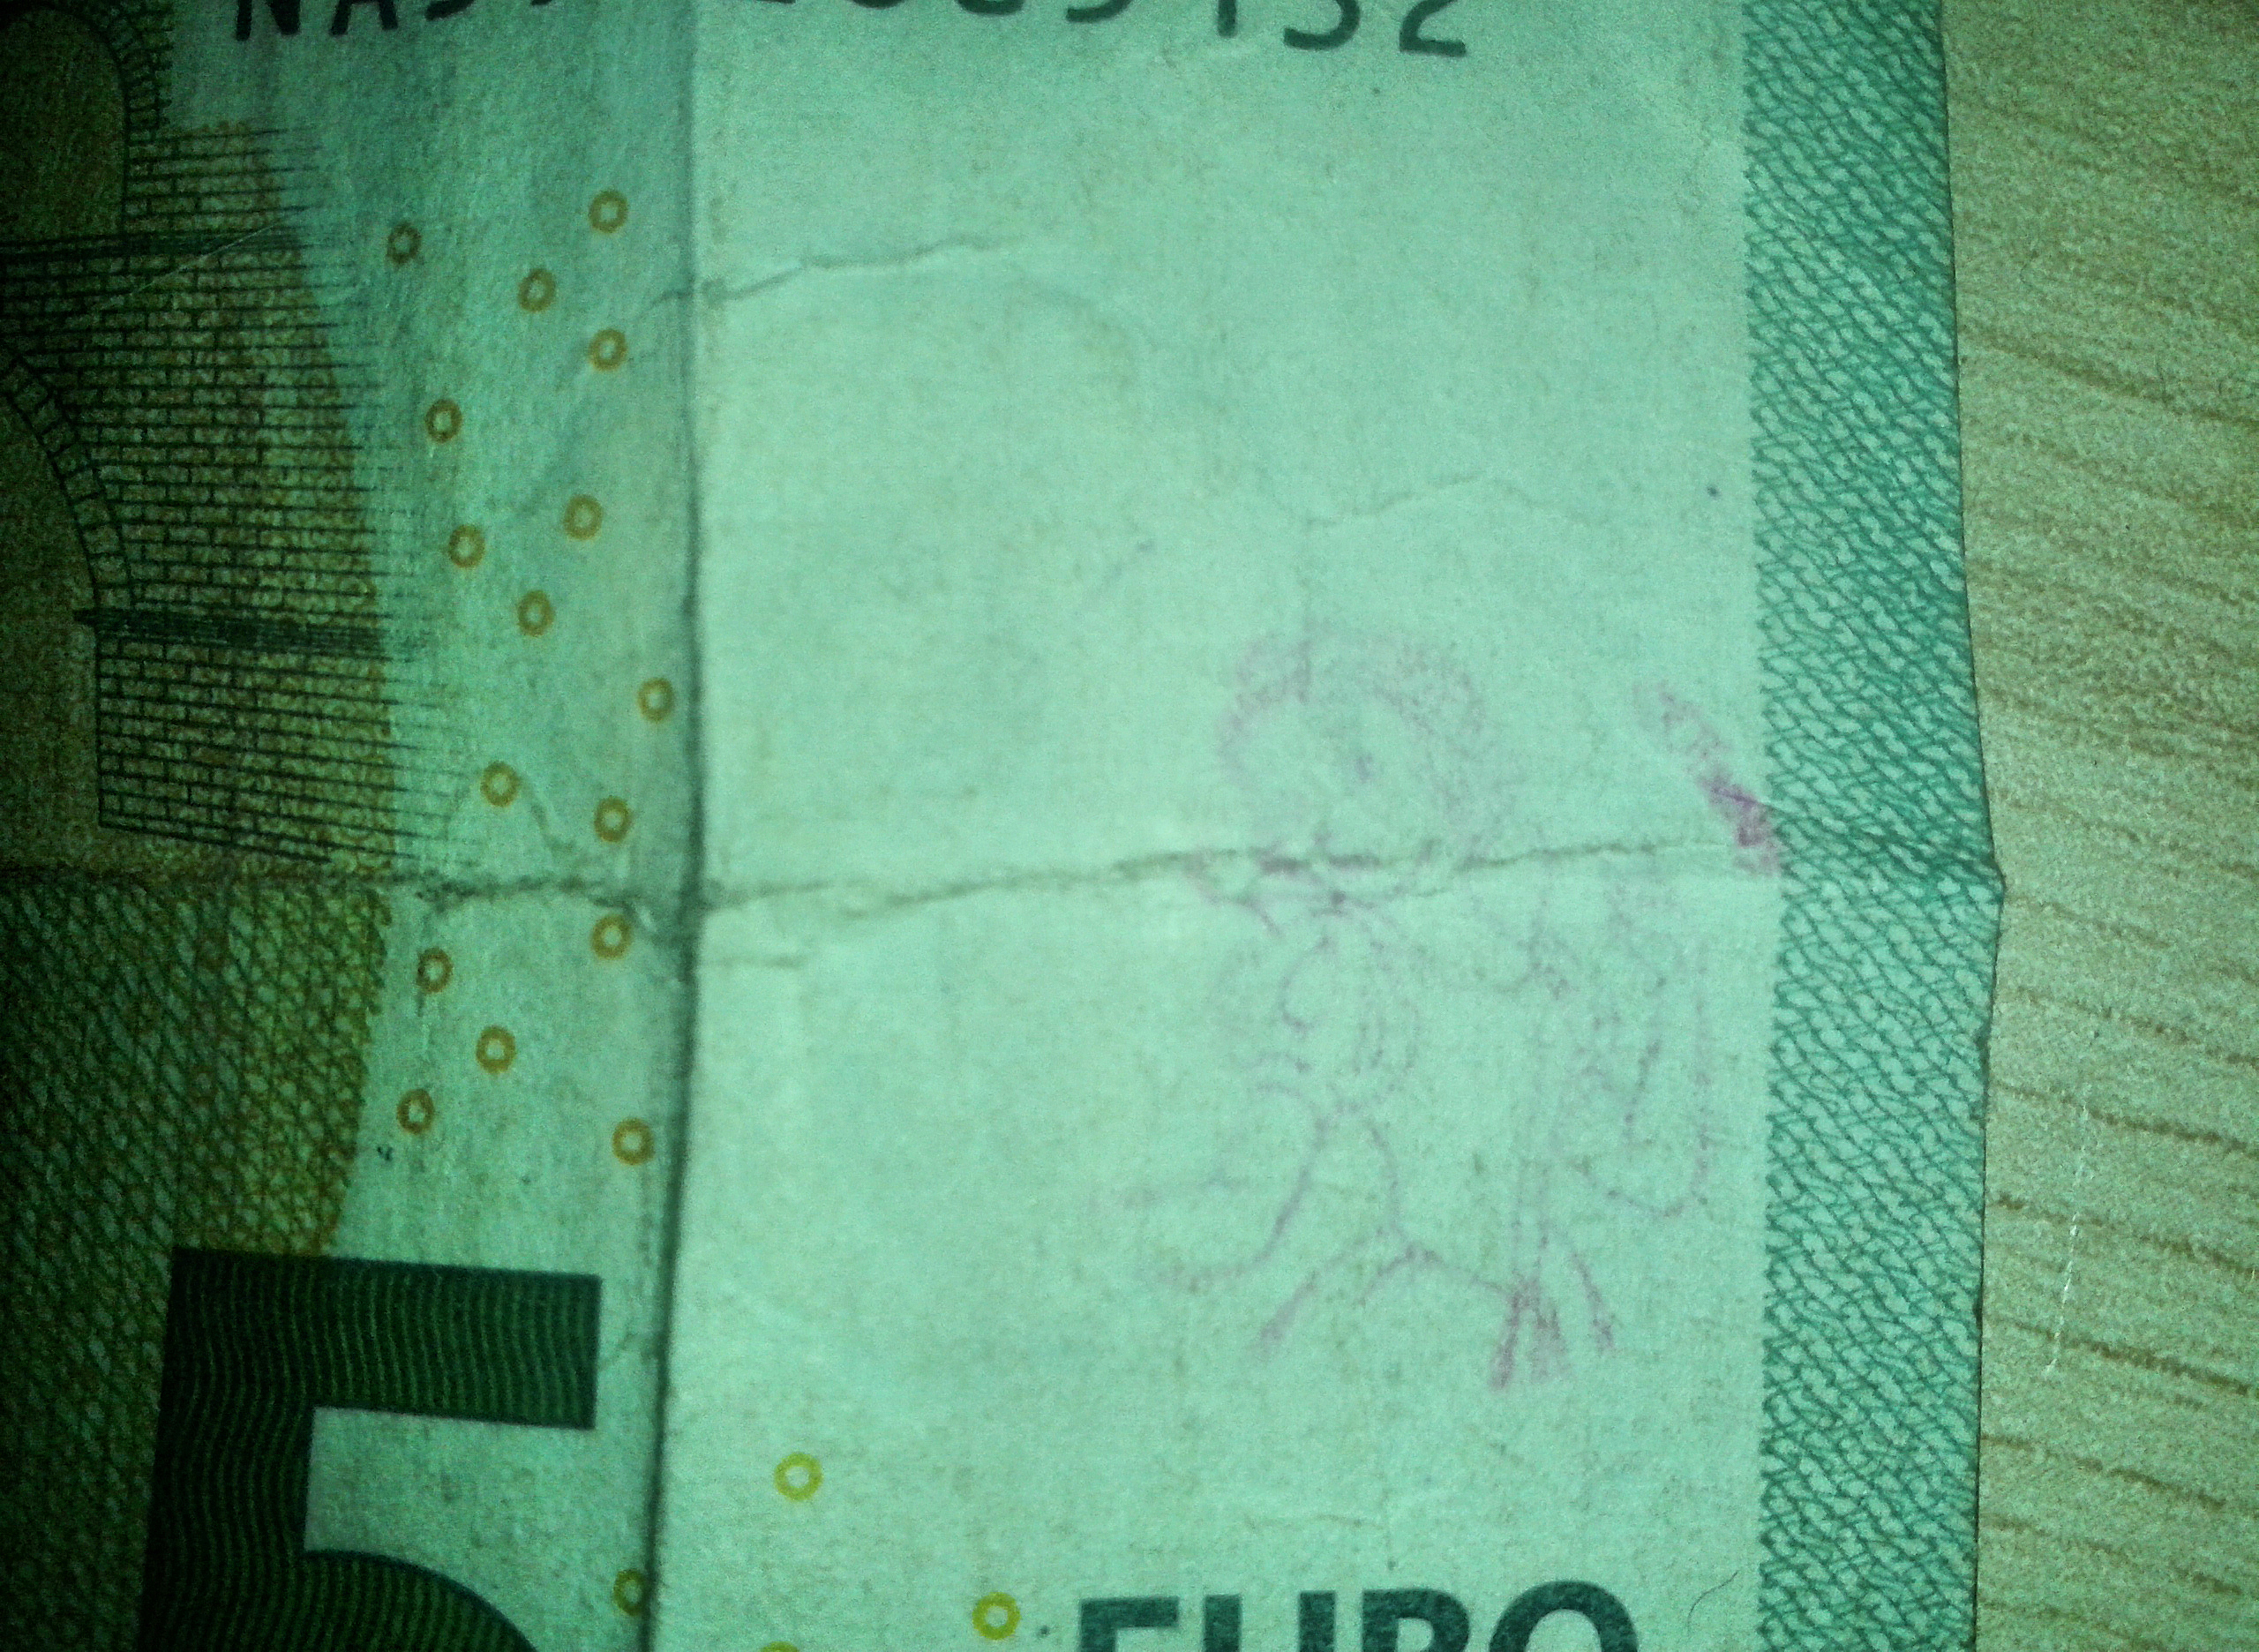 Disegno Biancaneve retro 5 euro (dettaglio).jpg